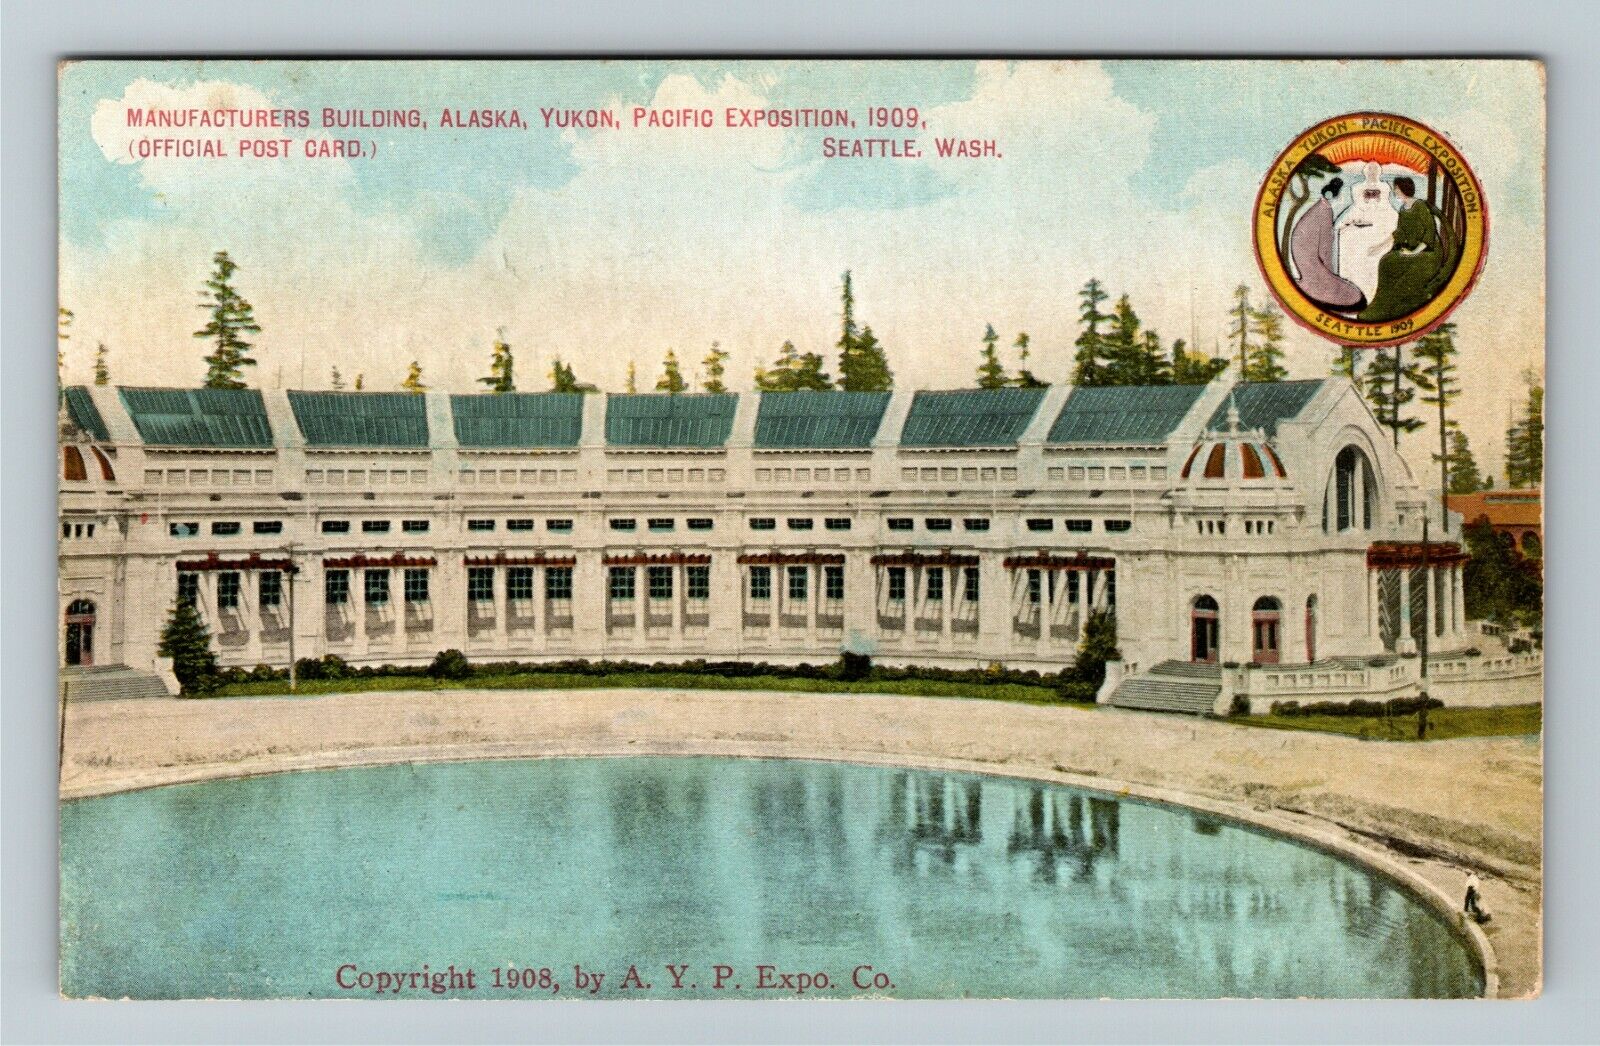 1909 Alaska Yukon Pacific Exposition Manufacturers Building Vintage Postcard